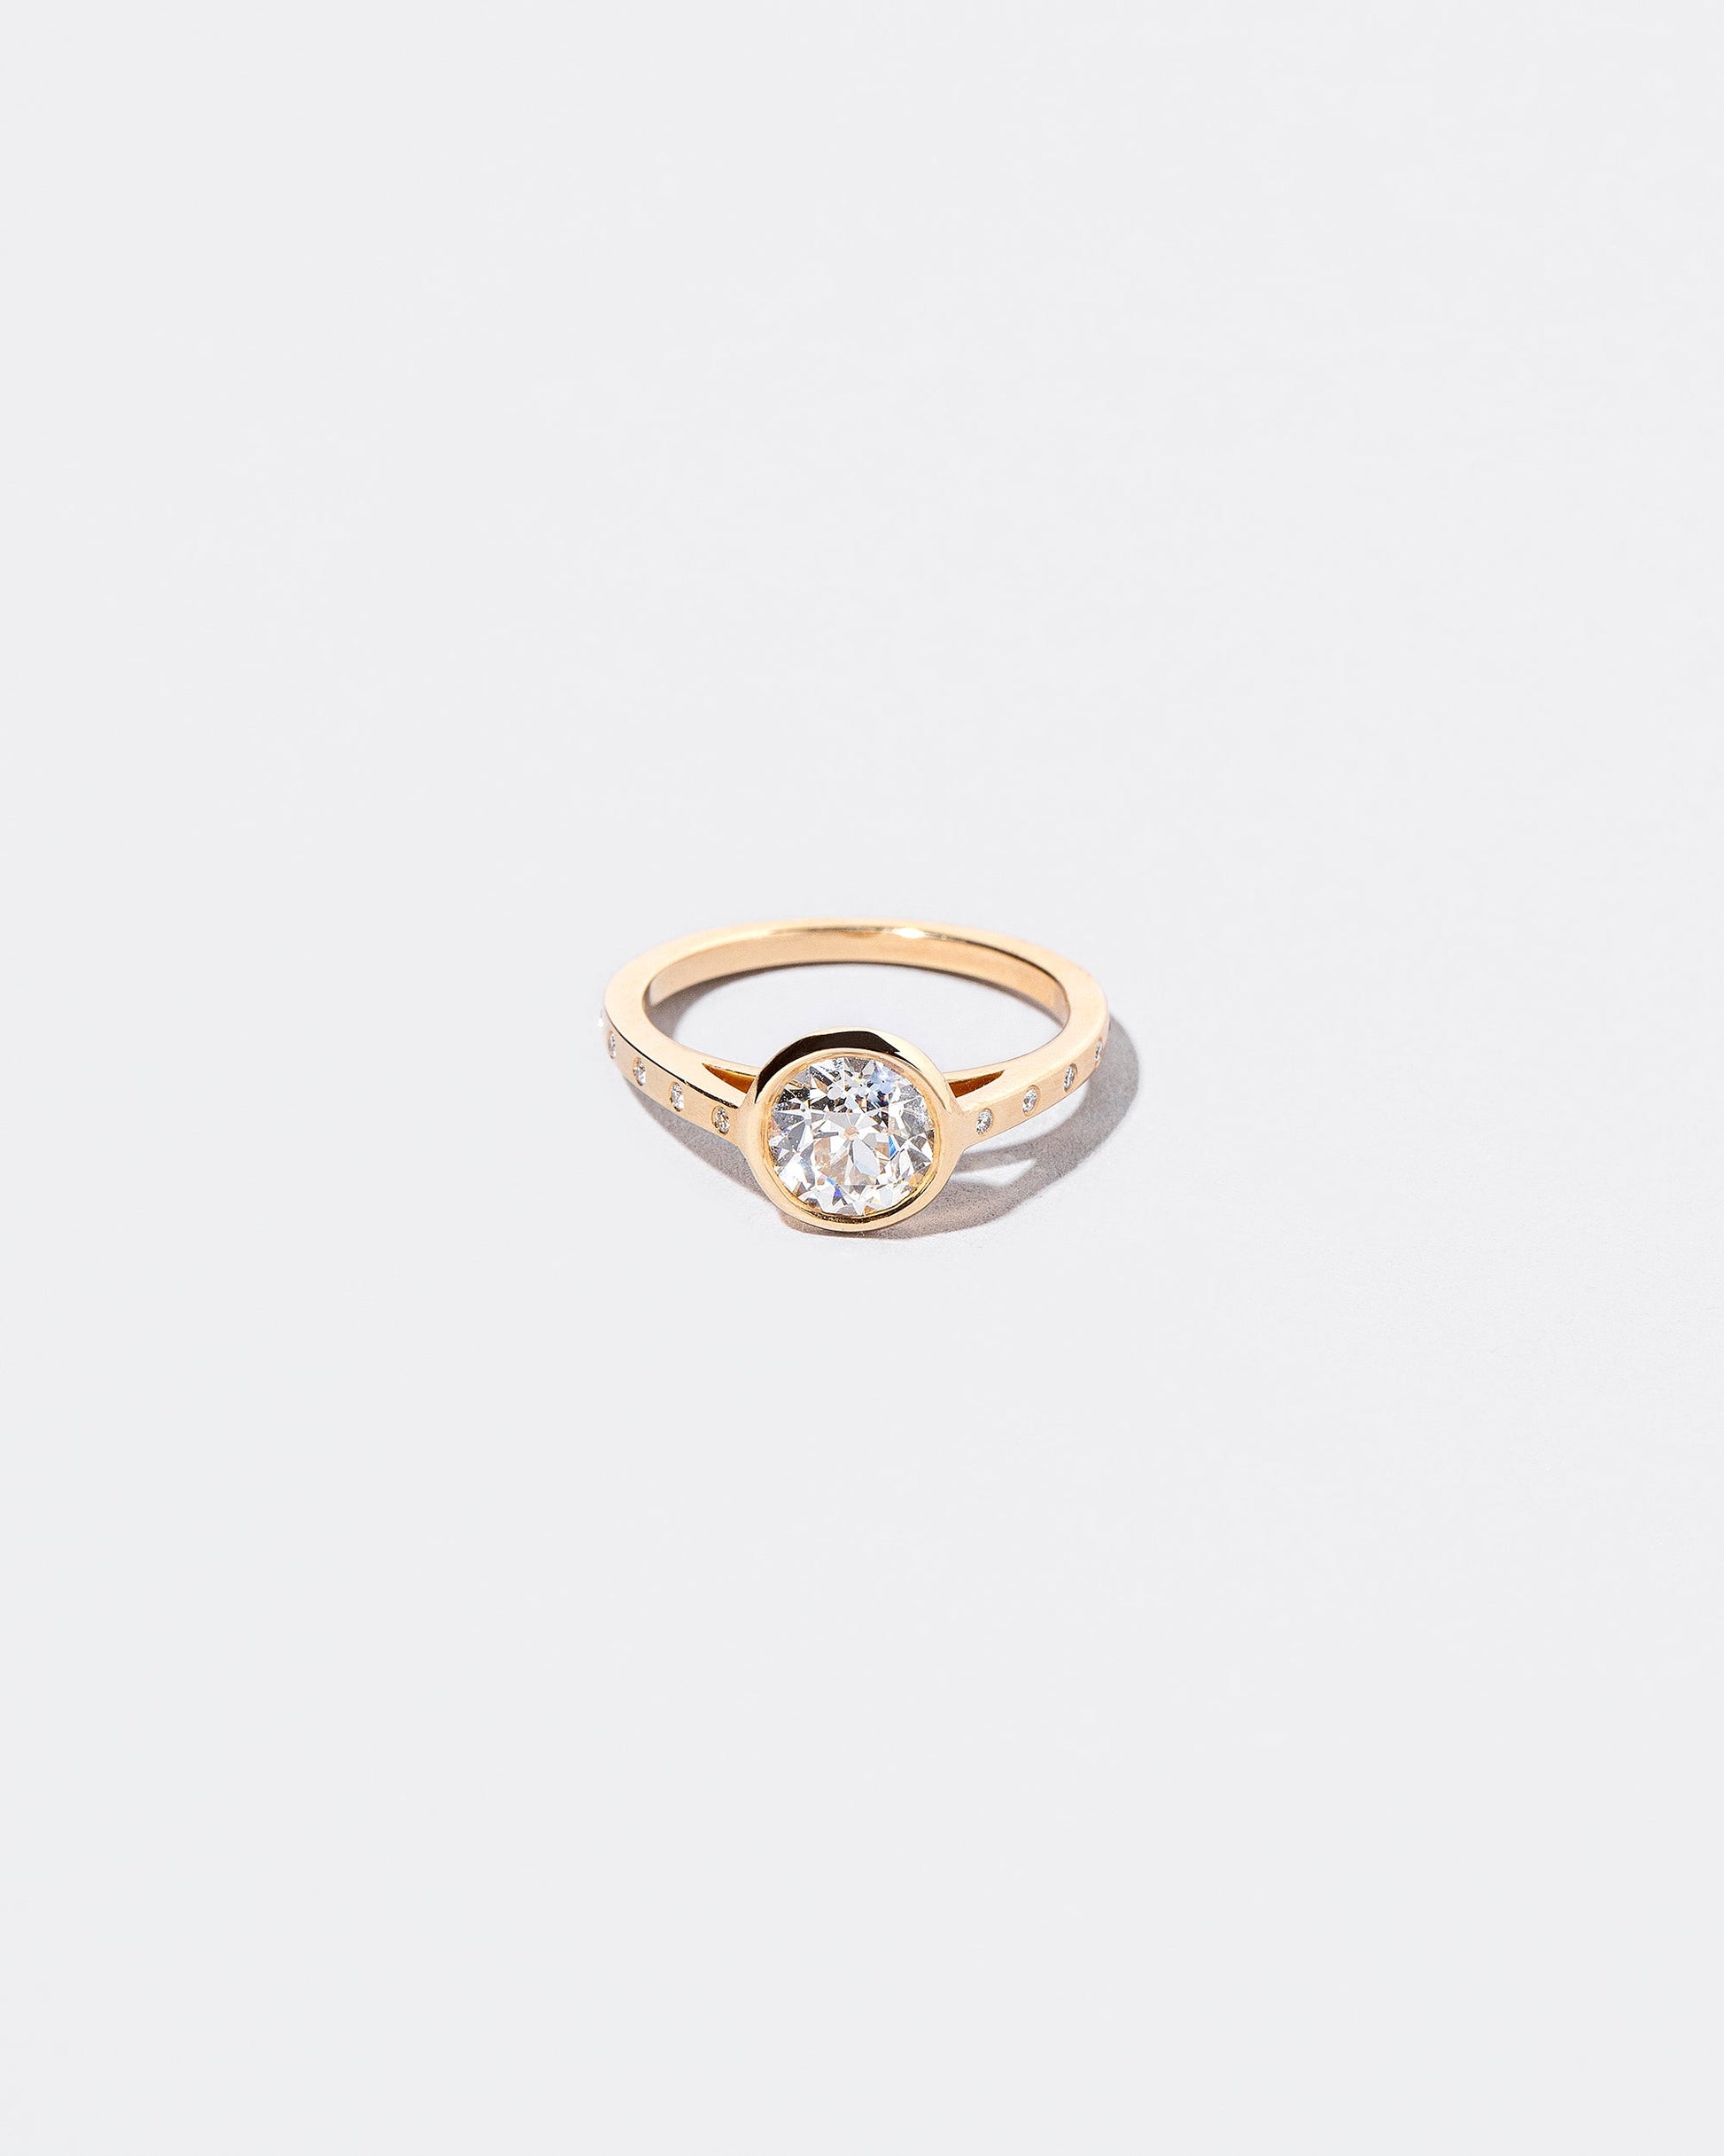  Calatrava Ring - White Diamond on light color background.